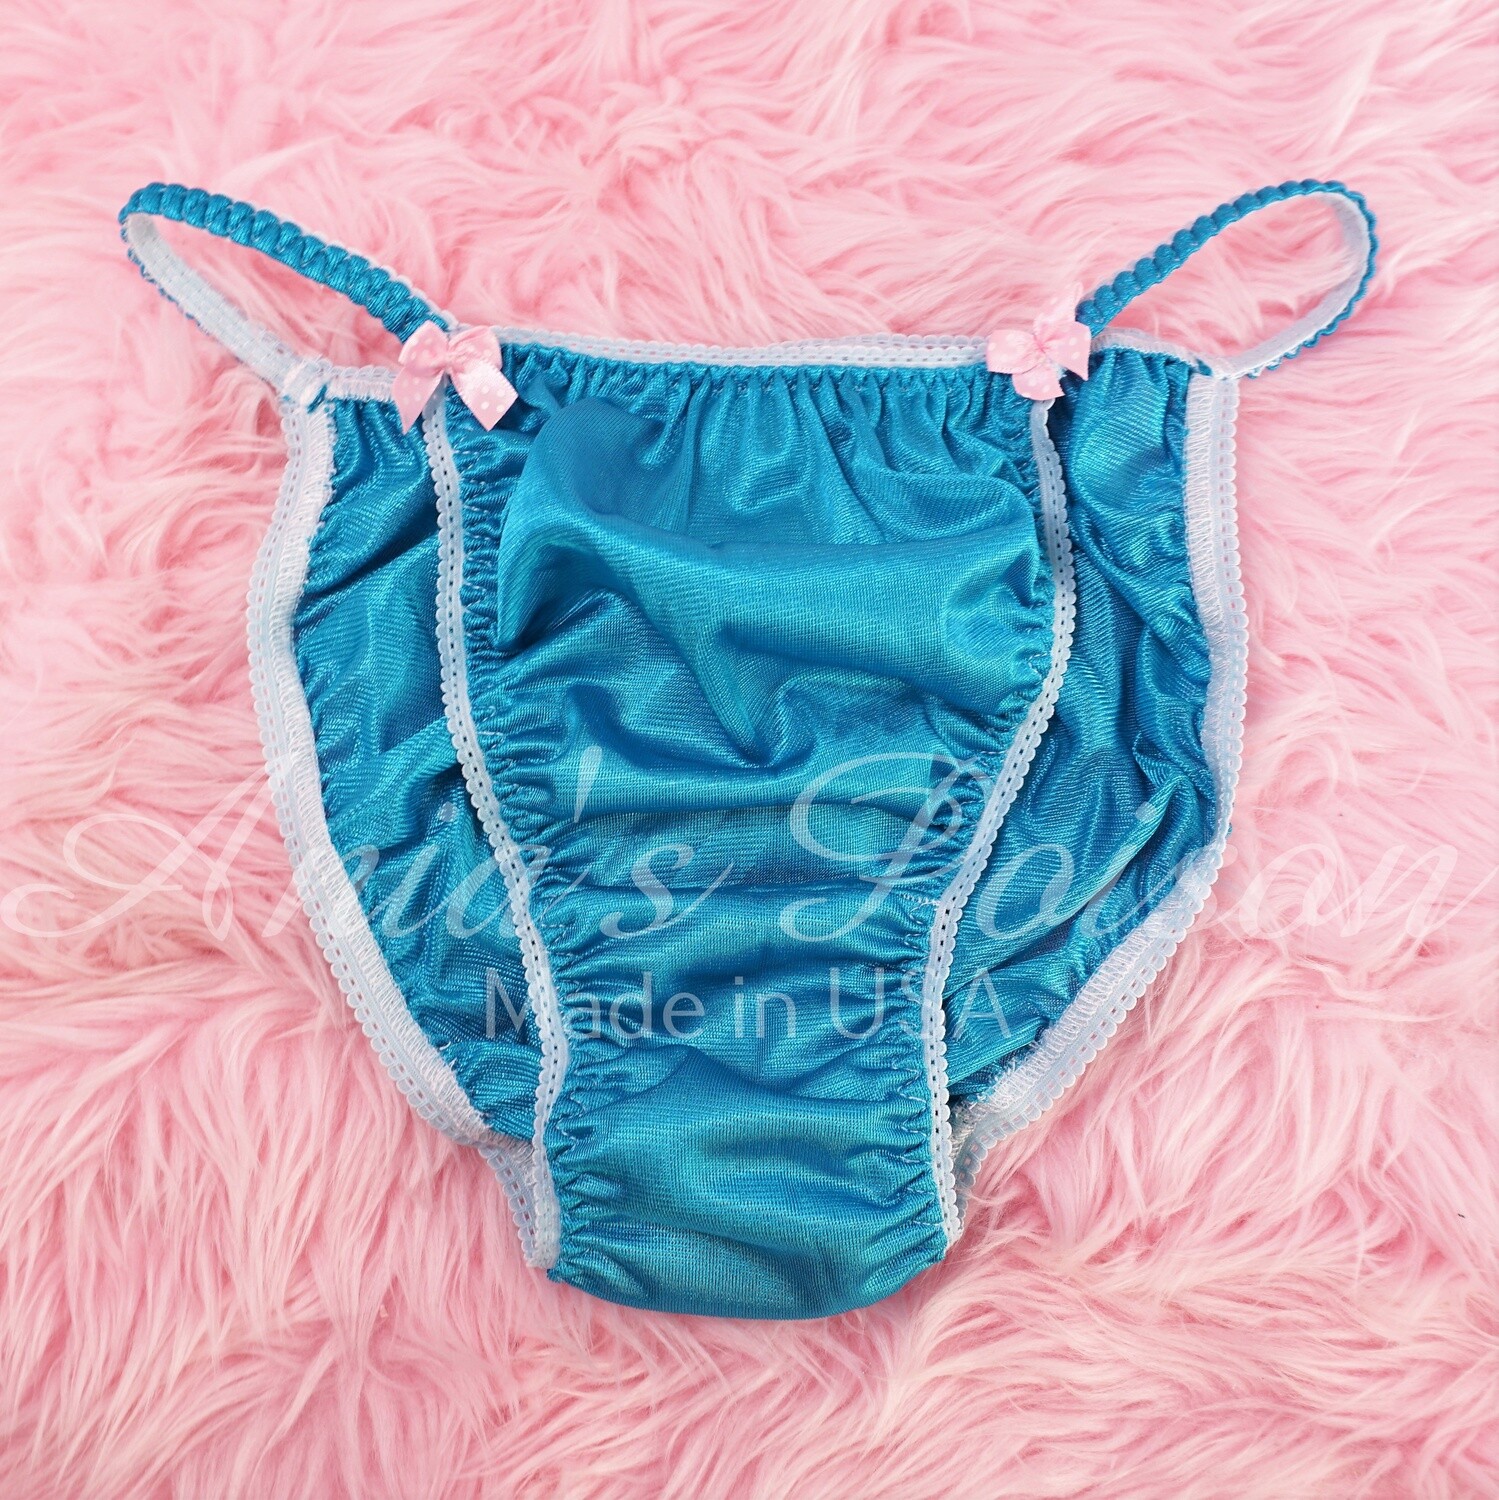 Nylon Chiffon Ania's Poison MANties Rare Vintage Style Turquoise Blue string bikini soft Sissy panties for men sz M L XL FLASH SALE